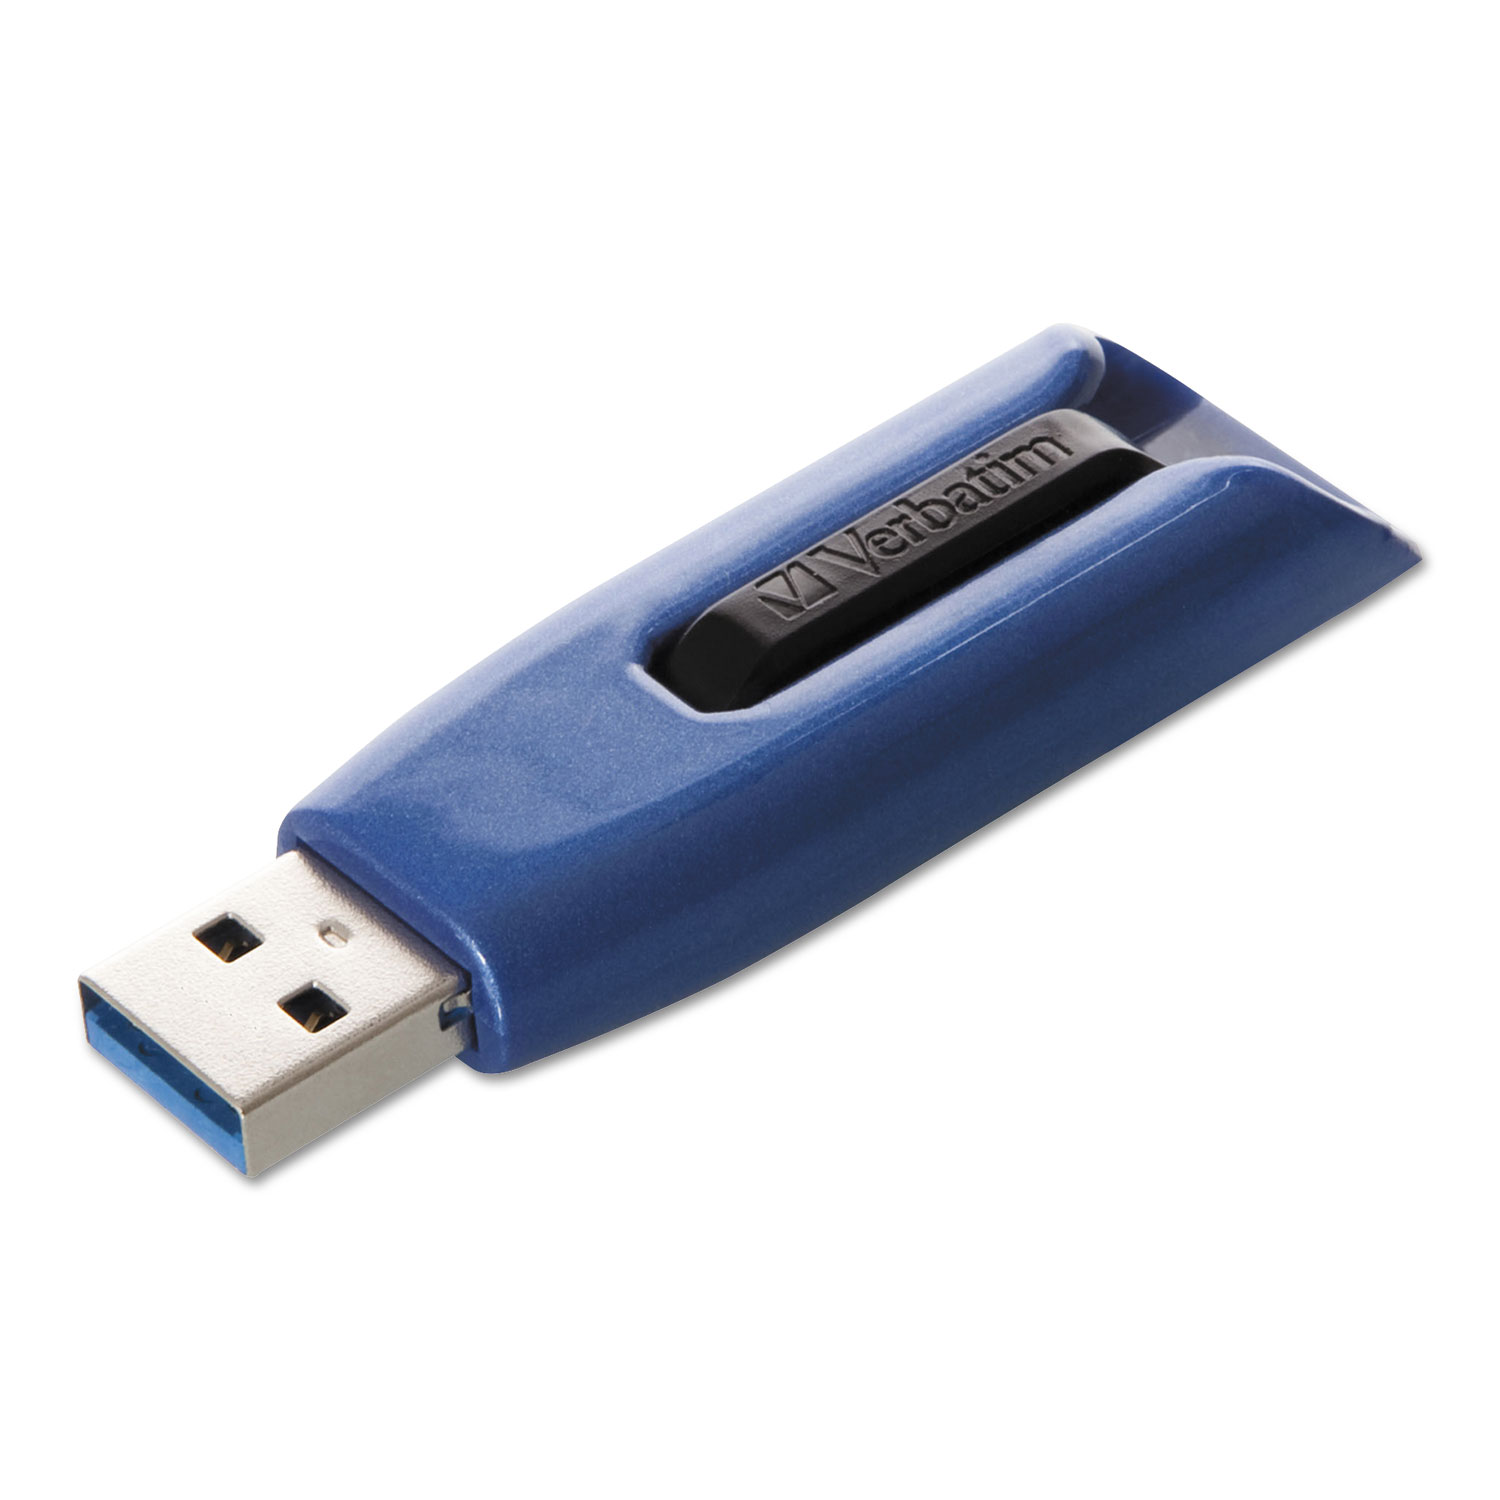  Verbatim 49809 V3 Max USB 3.0 Flash Drive, 256 GB, Blue (VER49809) 